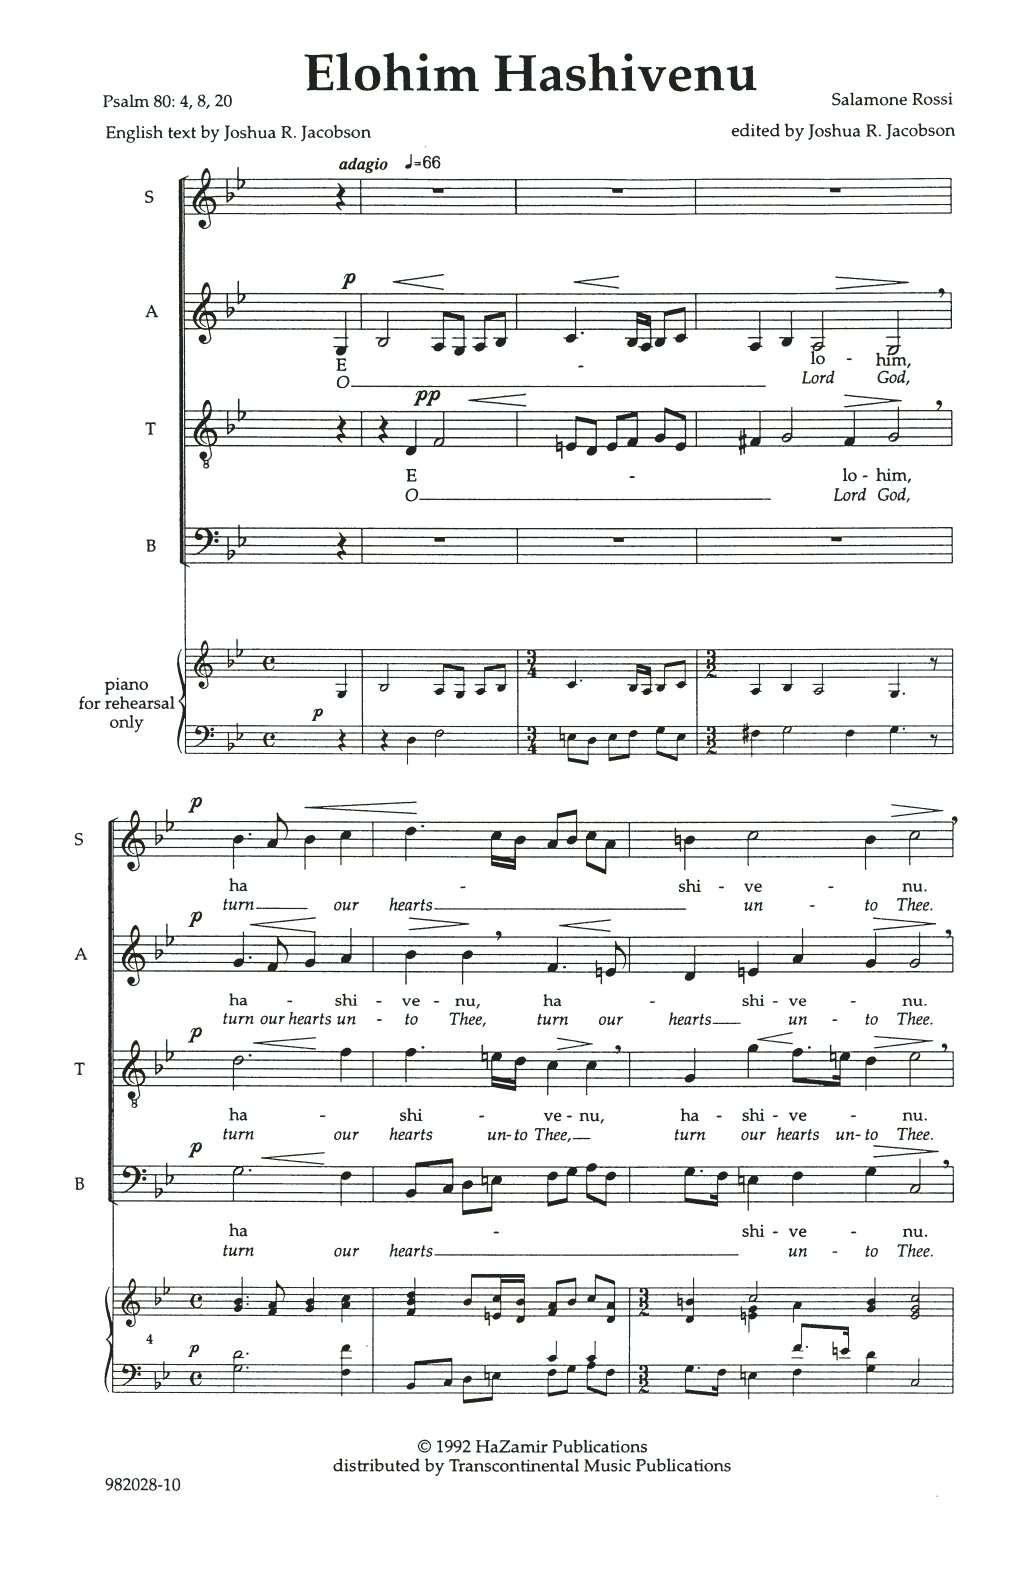 Joshua Jacobson Elohim Hashiveinu (O Lord, Turn Our Hearts) Sheet Music Notes & Chords for SATB Choir - Download or Print PDF